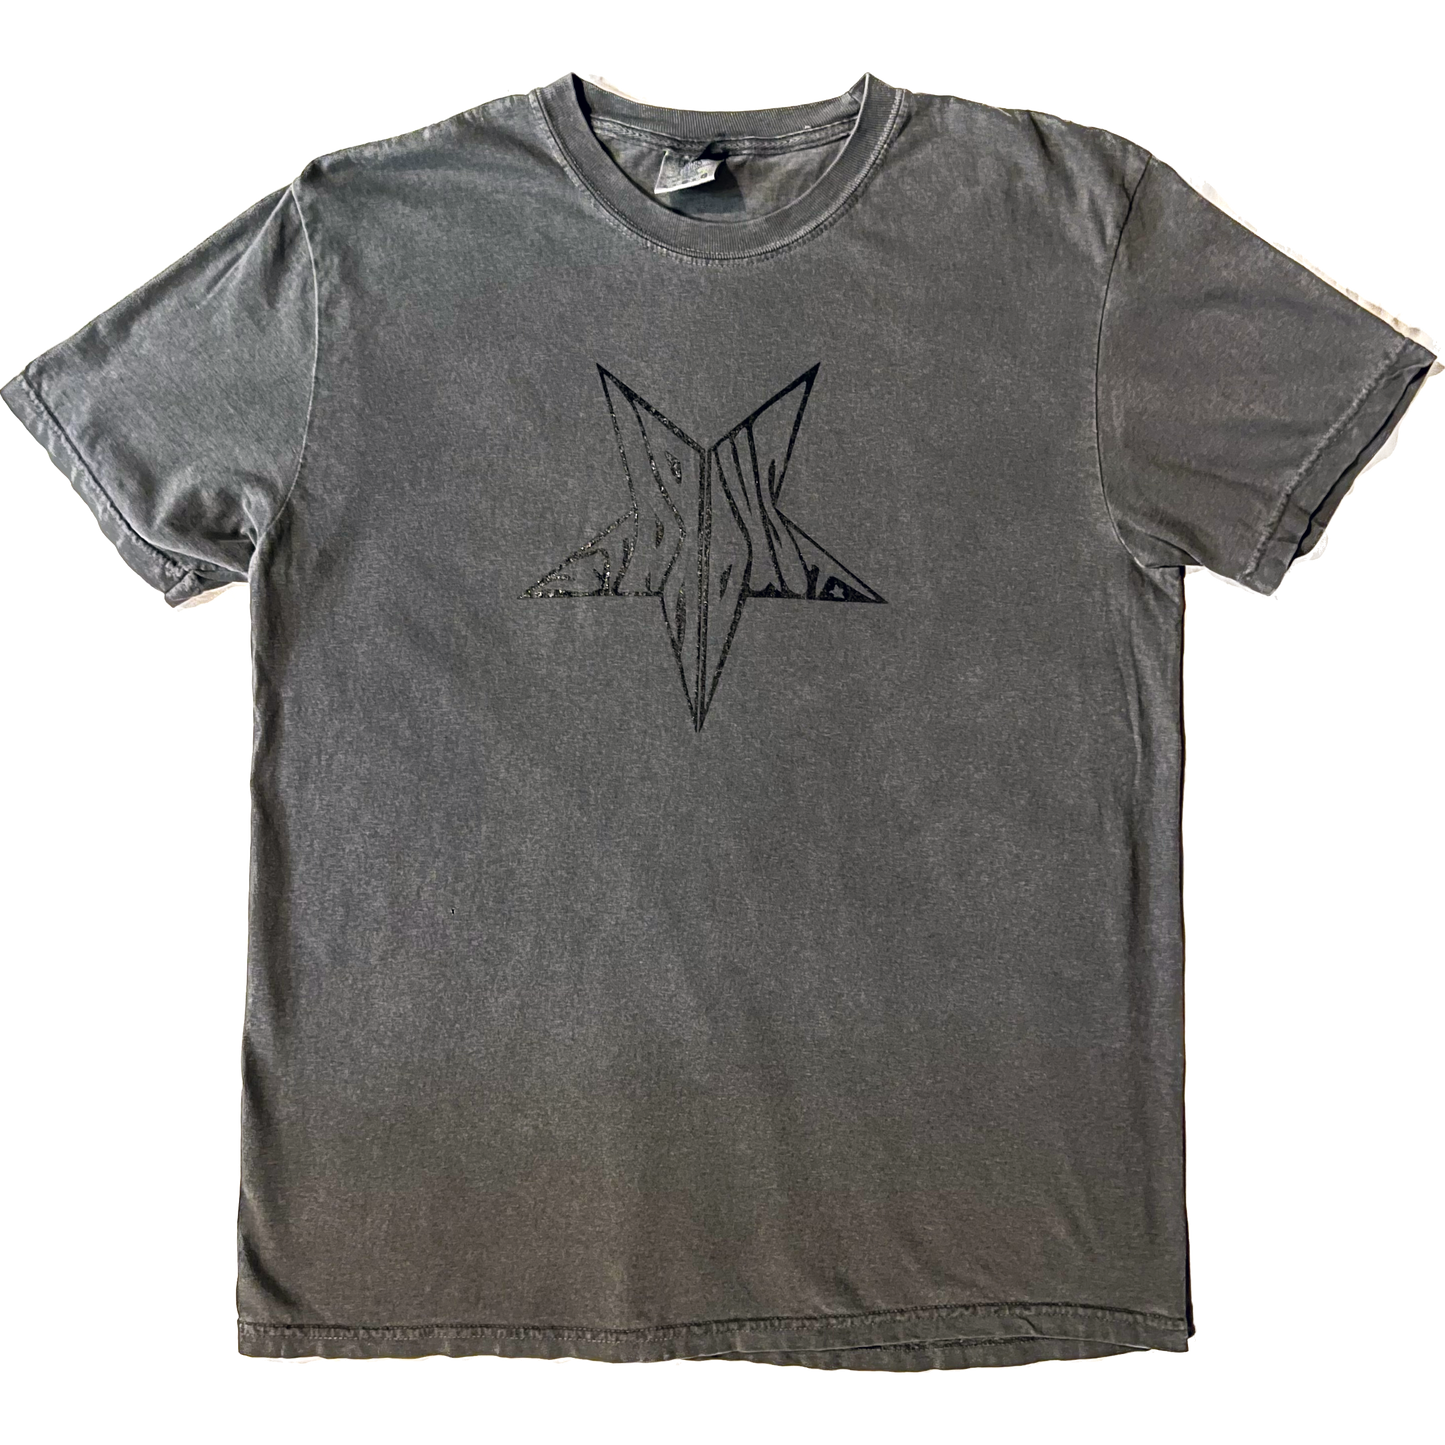 Stardust Skate Shop Matte Black Star Tee 026 - Assorted Colors - 6.1 oz